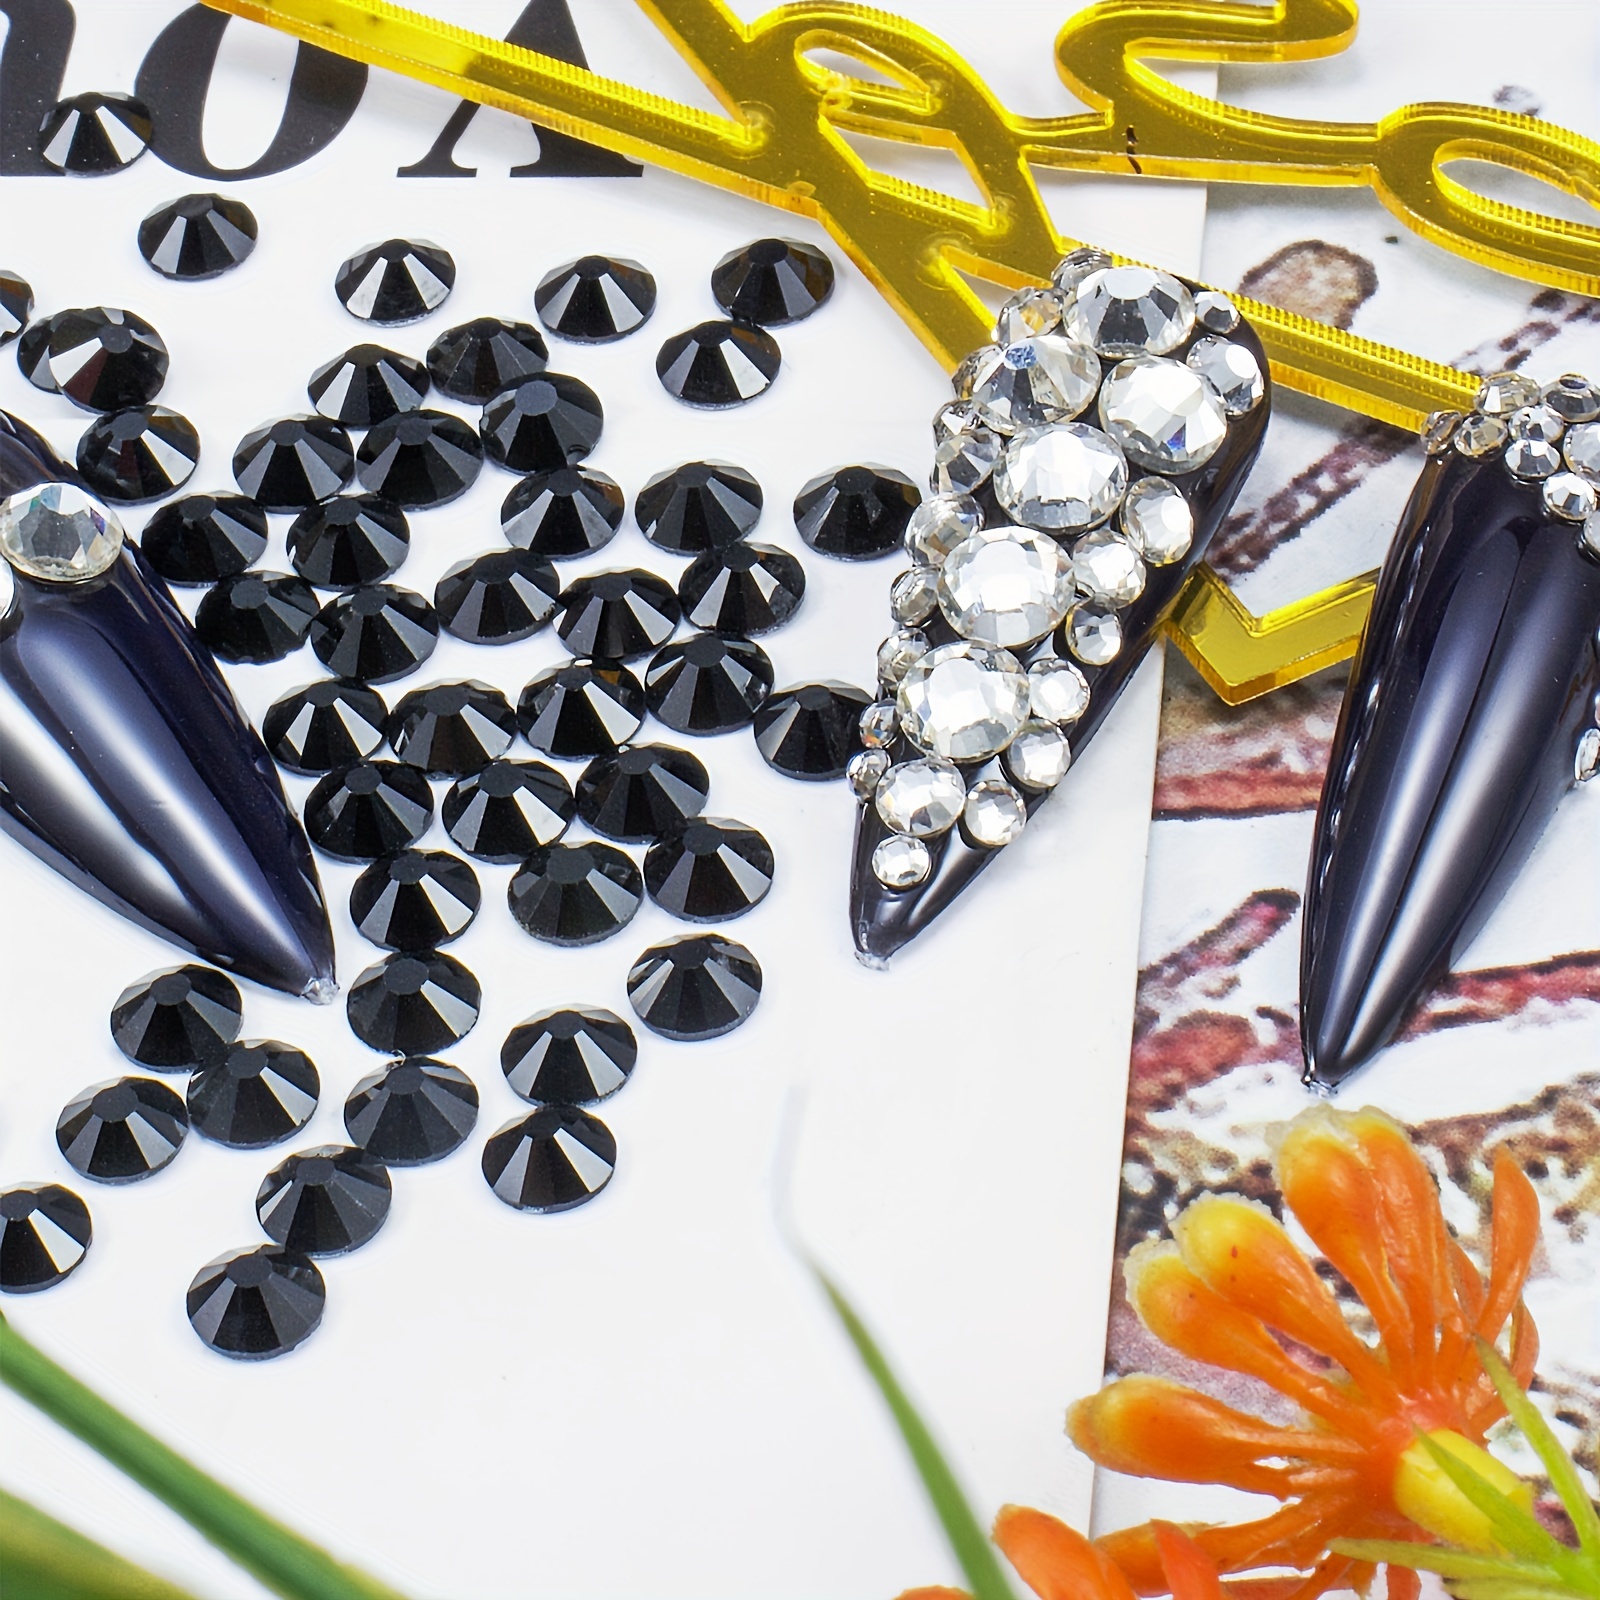  BELICEY Jet Black Crystal Rhinestones for Nails Design 2120Pcs  Nail Art Rhinestone Beads Flatback Gems for Nail Arts Multi Shapes Glass  Rhinestones for Nail DIY Makeup Clothing Crafts Art : Beauty